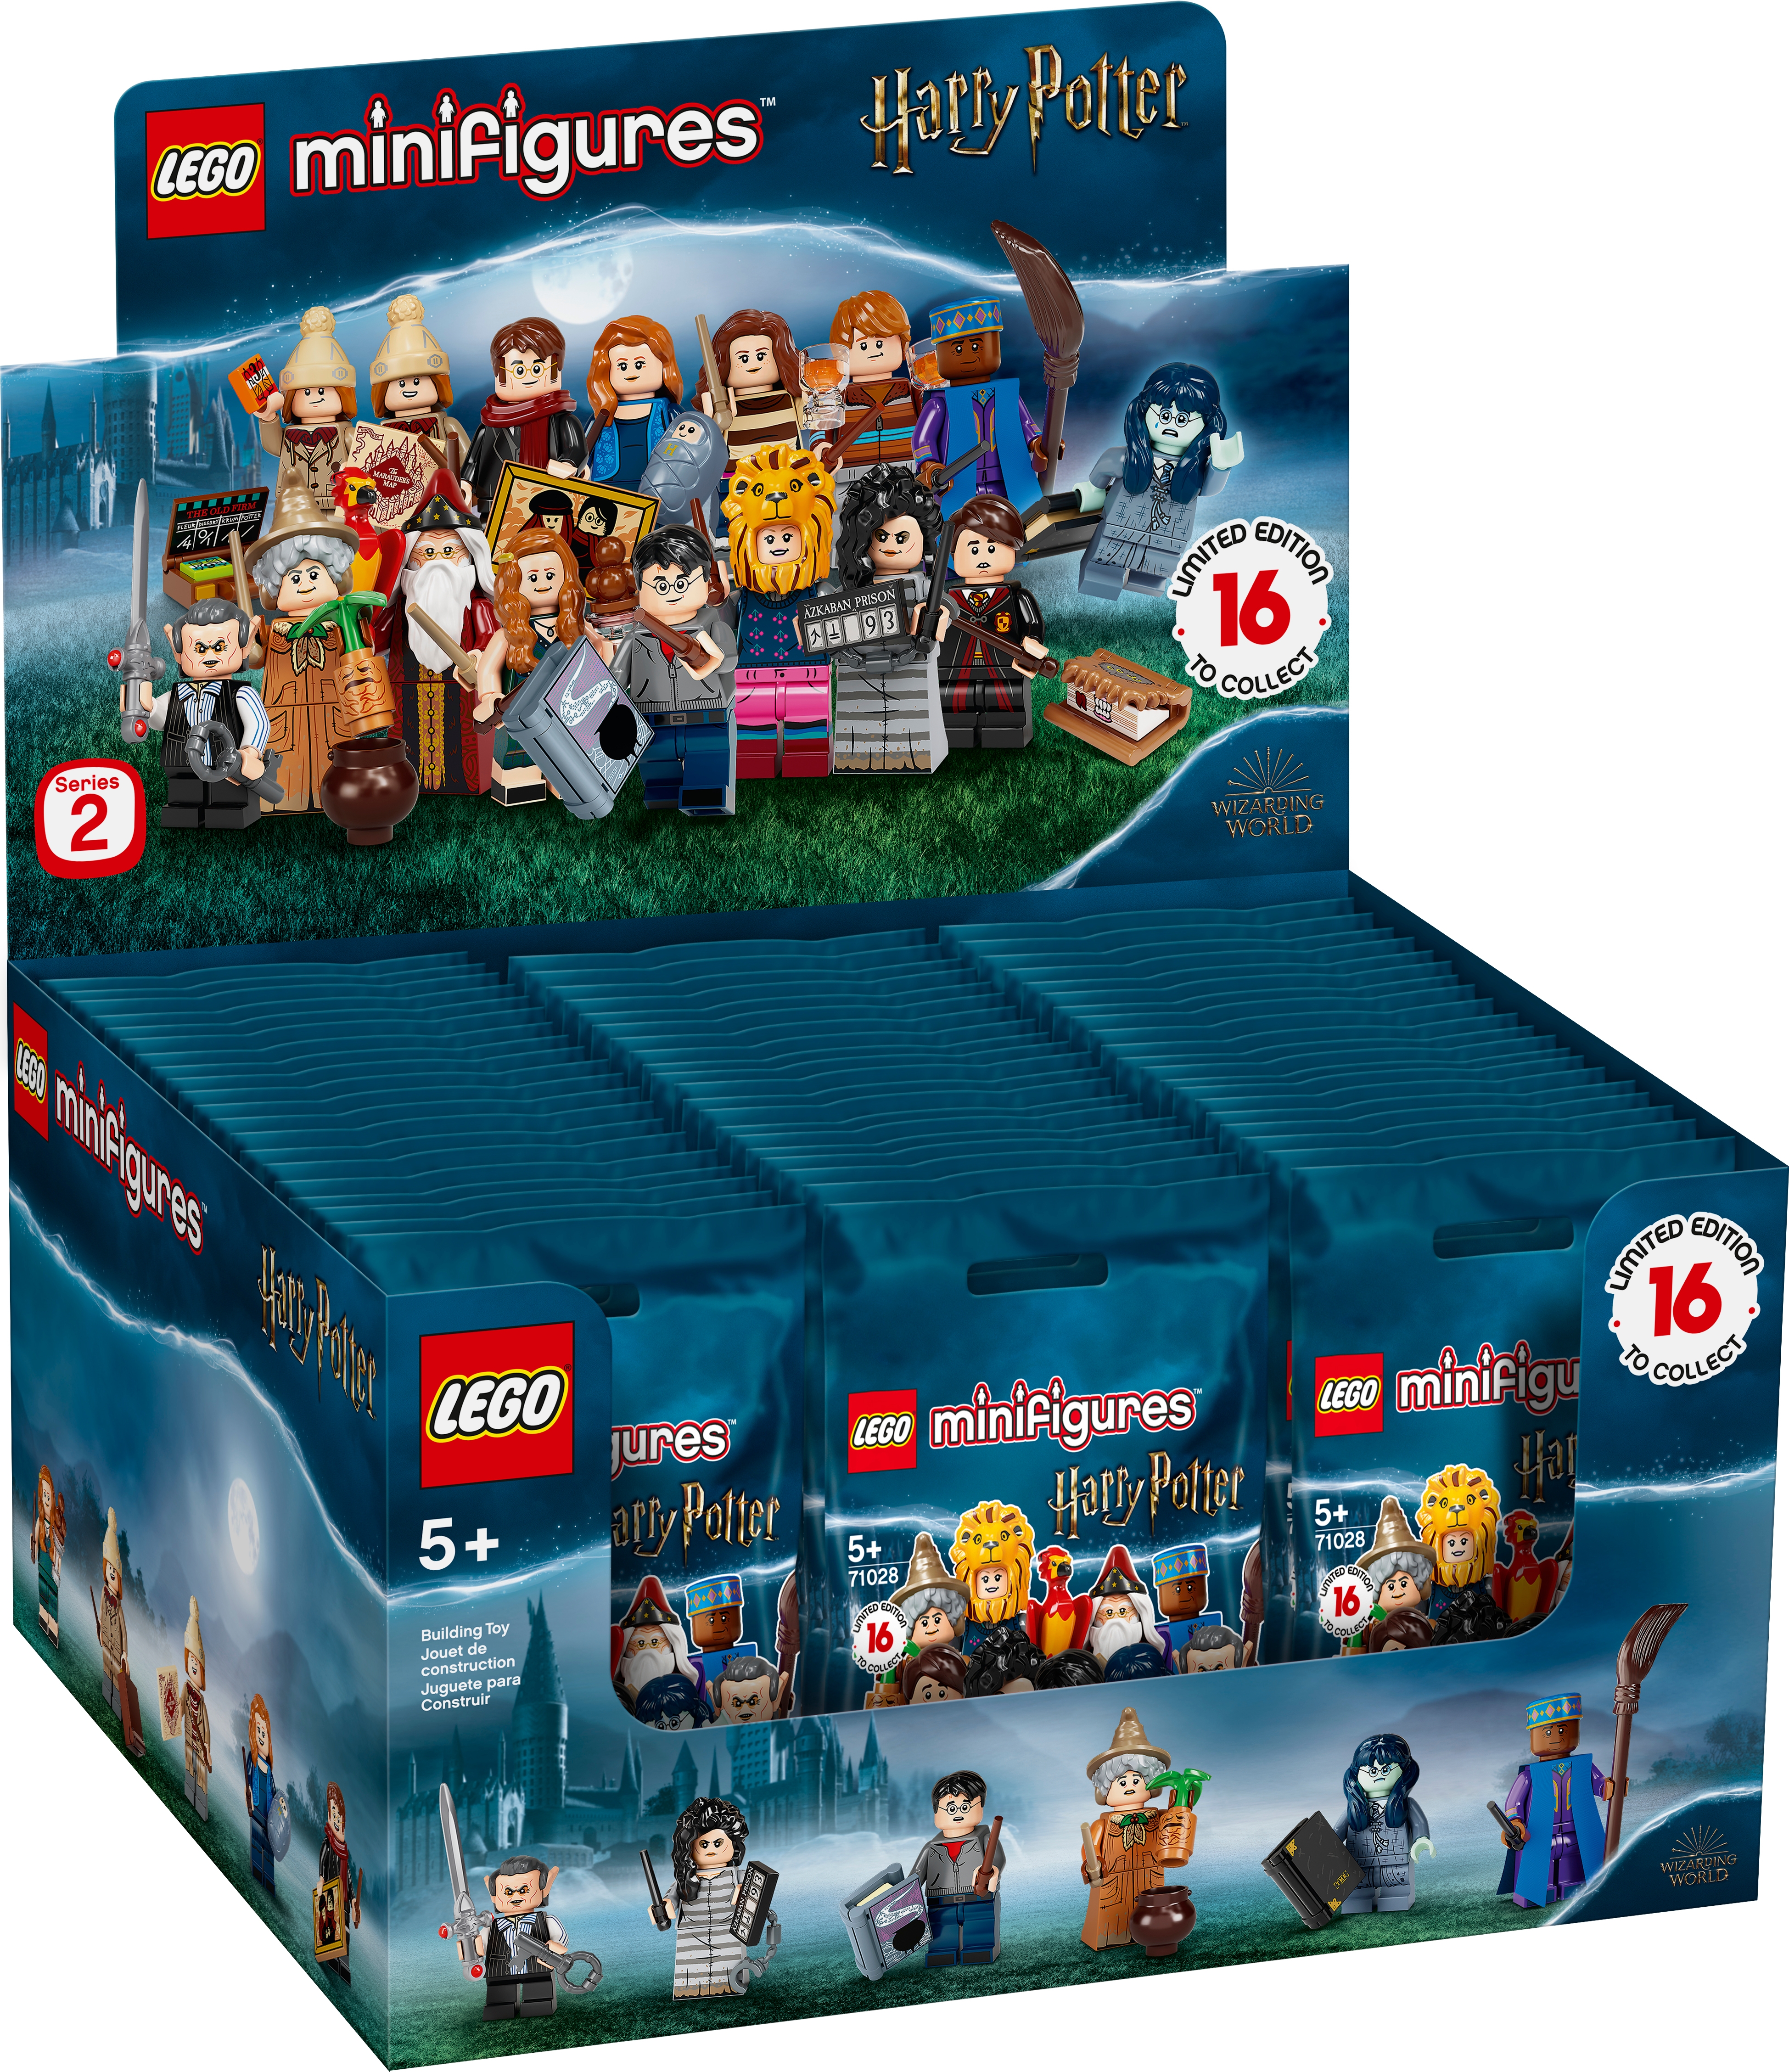 LEGO 71028 MINIFIGURES HARRY POTTER Serie 2 box intero 